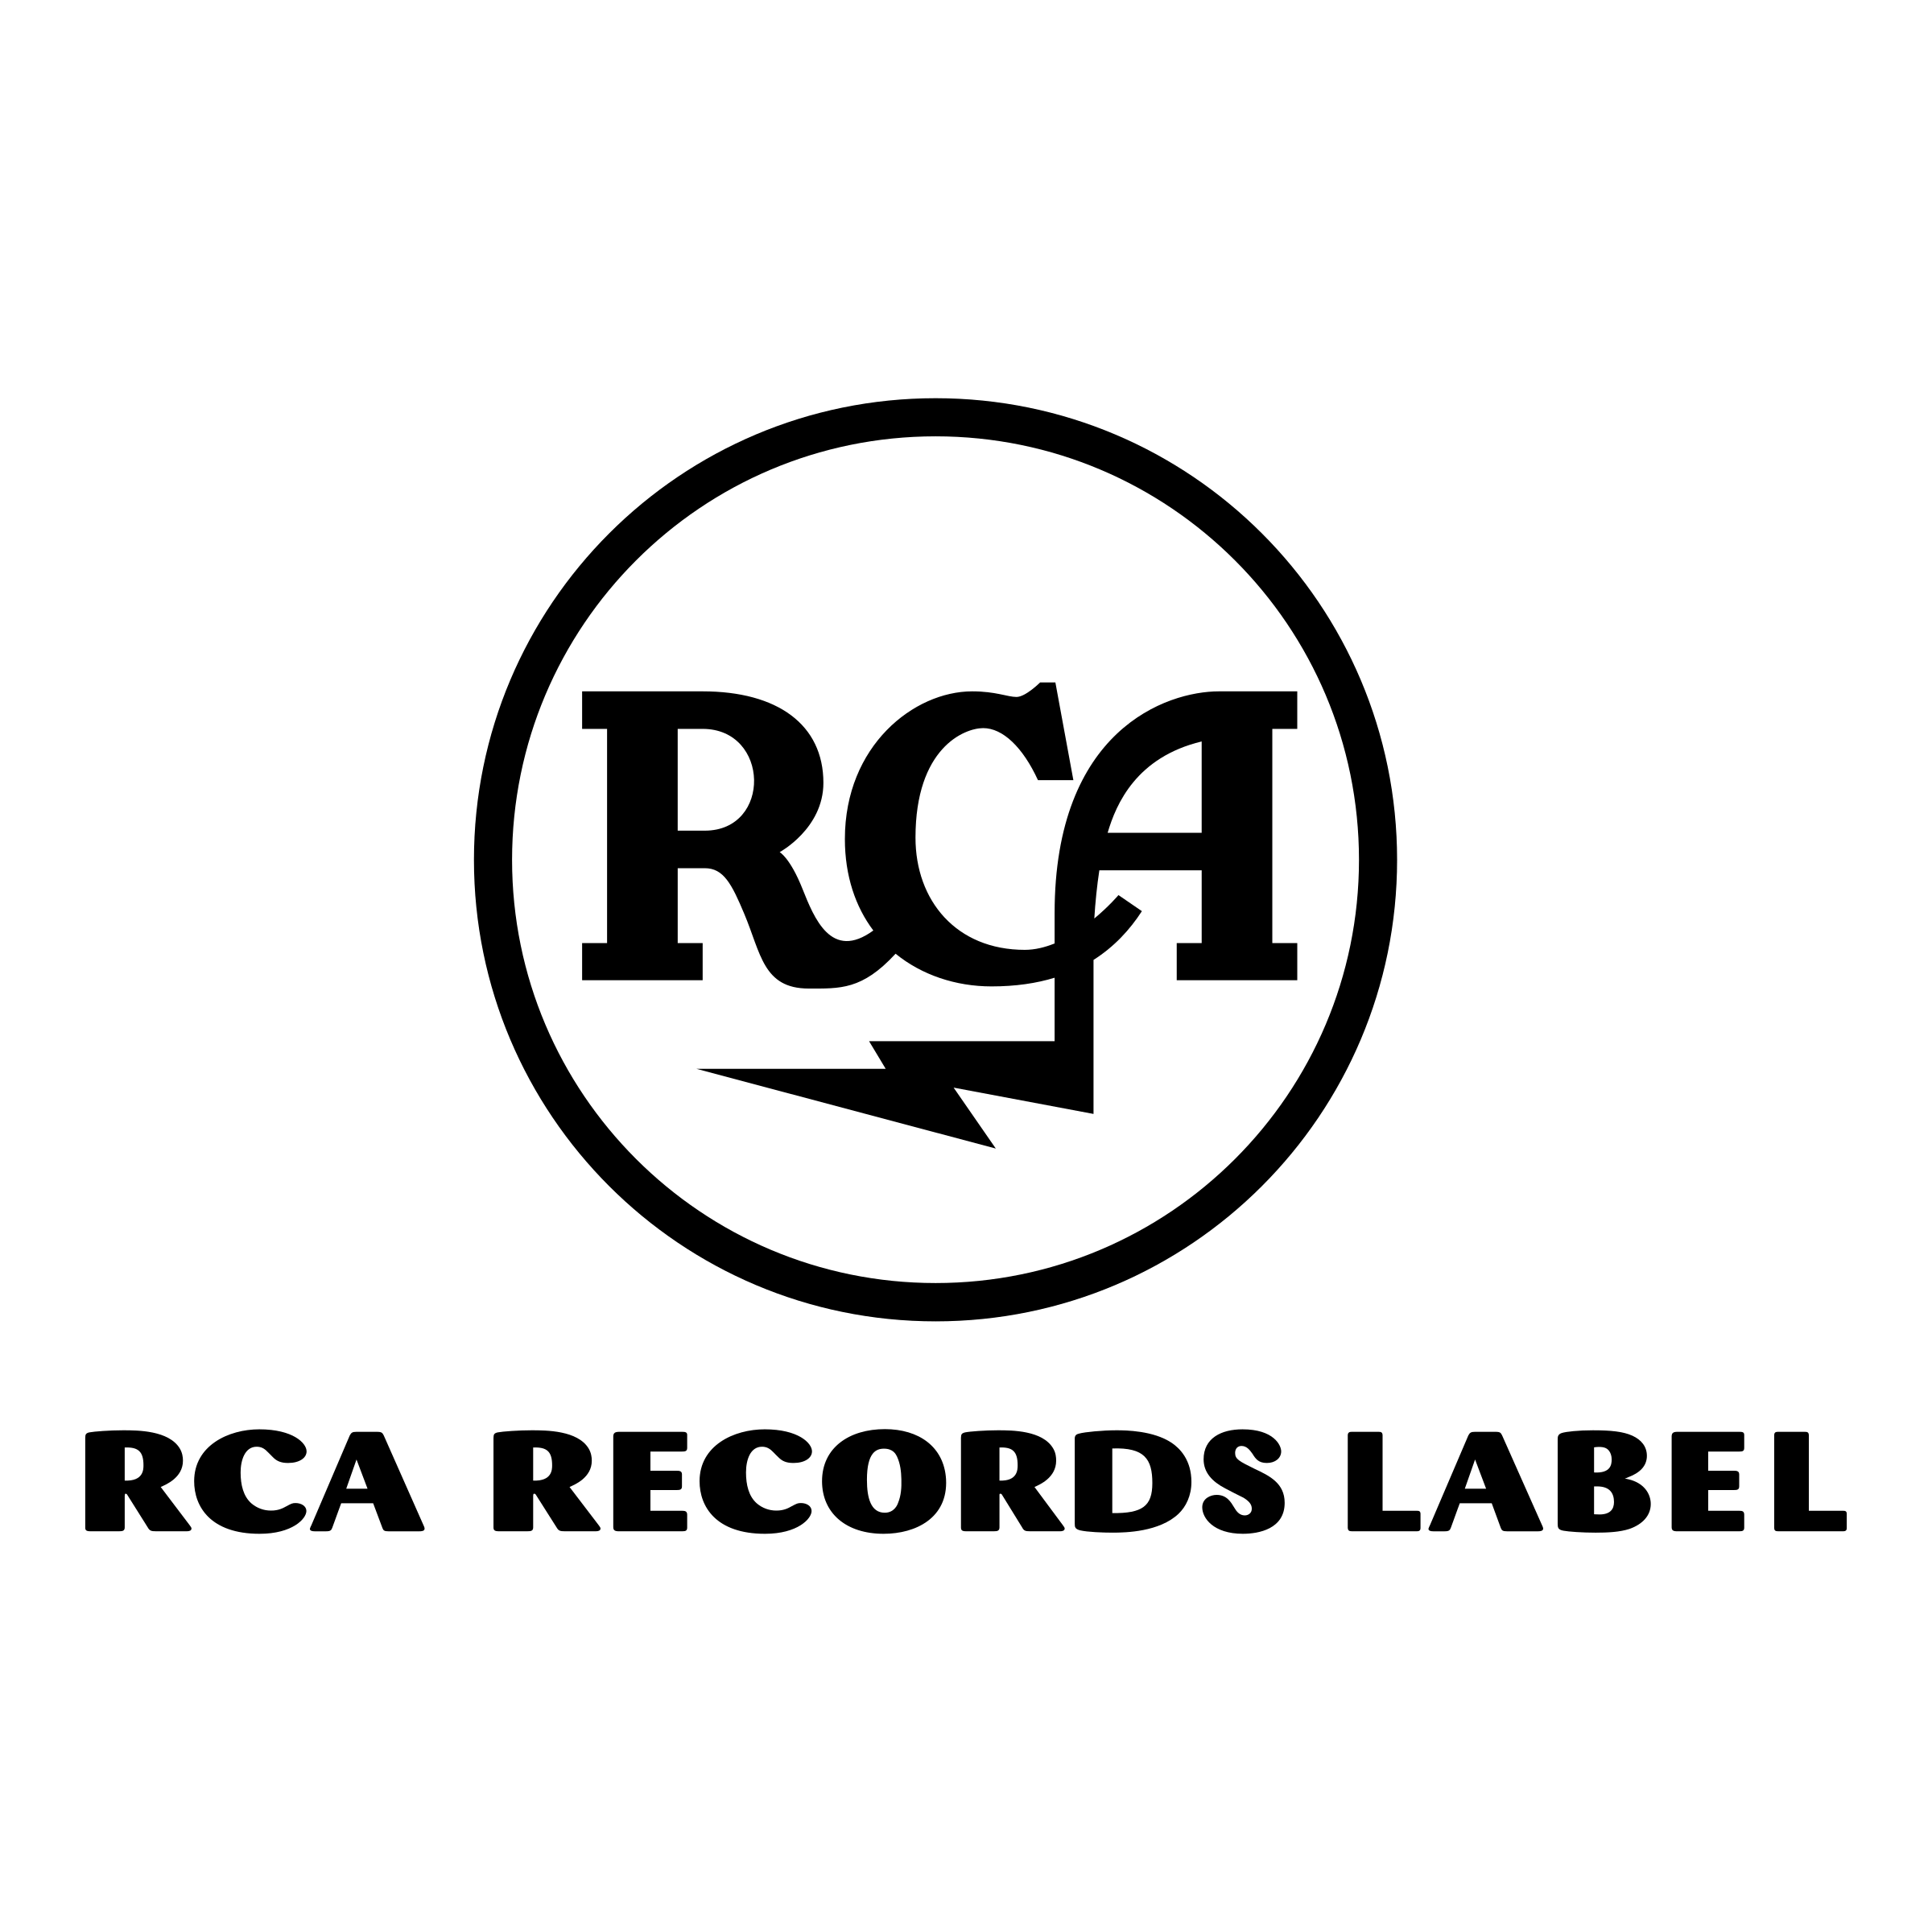 RCA Logo - RCA Logo PNG Transparent & SVG Vector